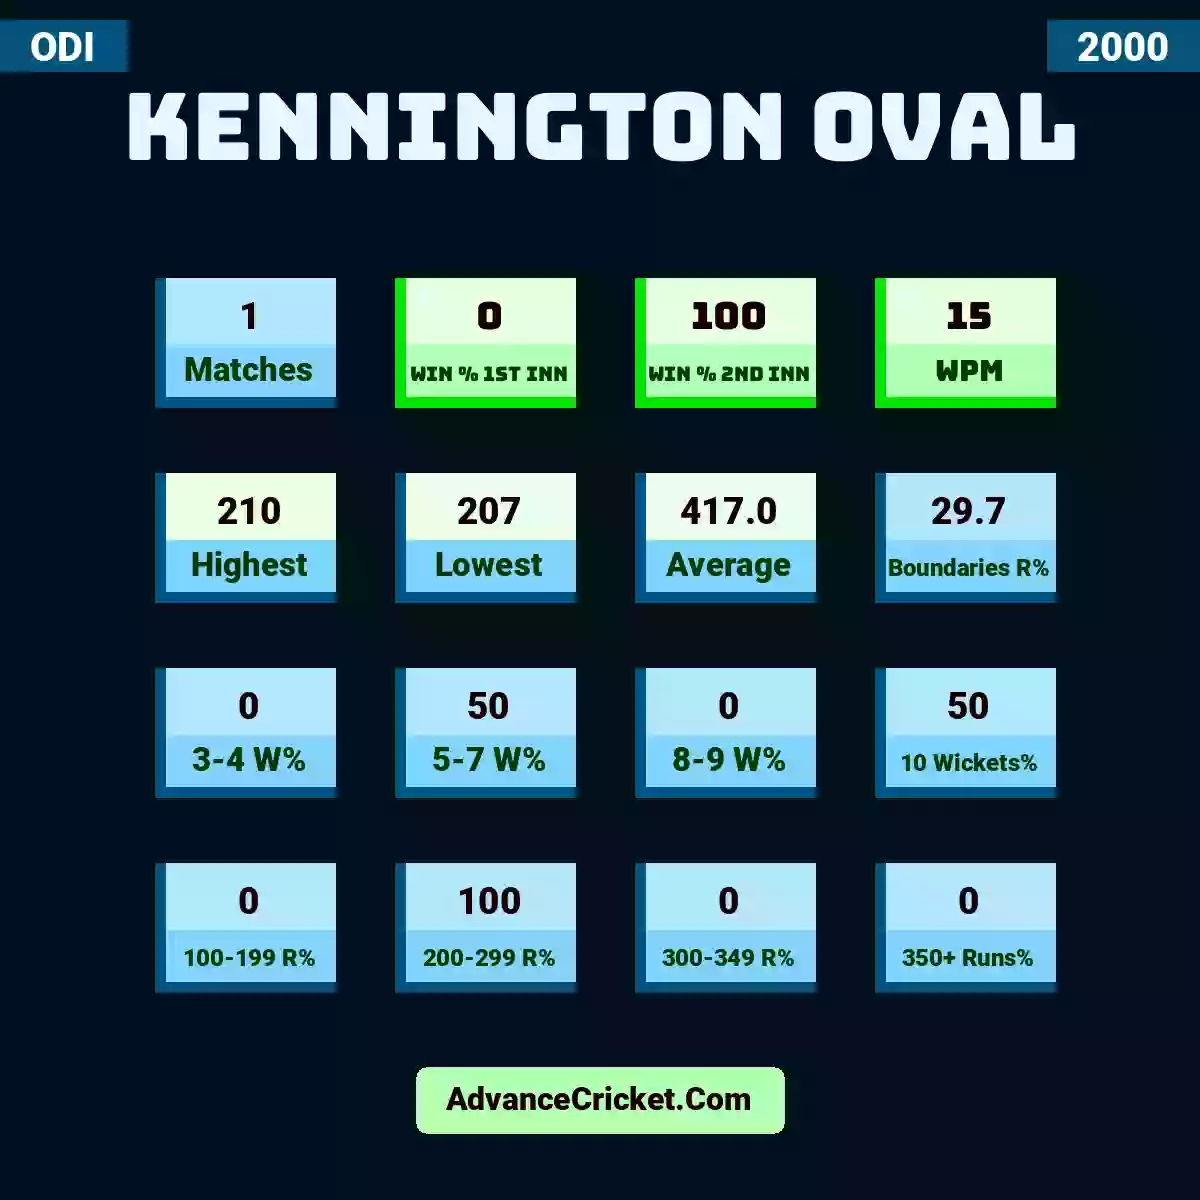 Image showing Kennington Oval with Matches: 1, Win % 1st Inn: 0, Win % 2nd Inn: 100, WPM: 15, Highest: 210, Lowest: 207, Average: 417.0, Boundaries R%: 29.7, 3-4 W%: 0, 5-7 W%: 50, 8-9 W%: 0, 10 Wickets%: 50, 100-199 R%: 0, 200-299 R%: 100, 300-349 R%: 0, 350+ Runs%: 0.